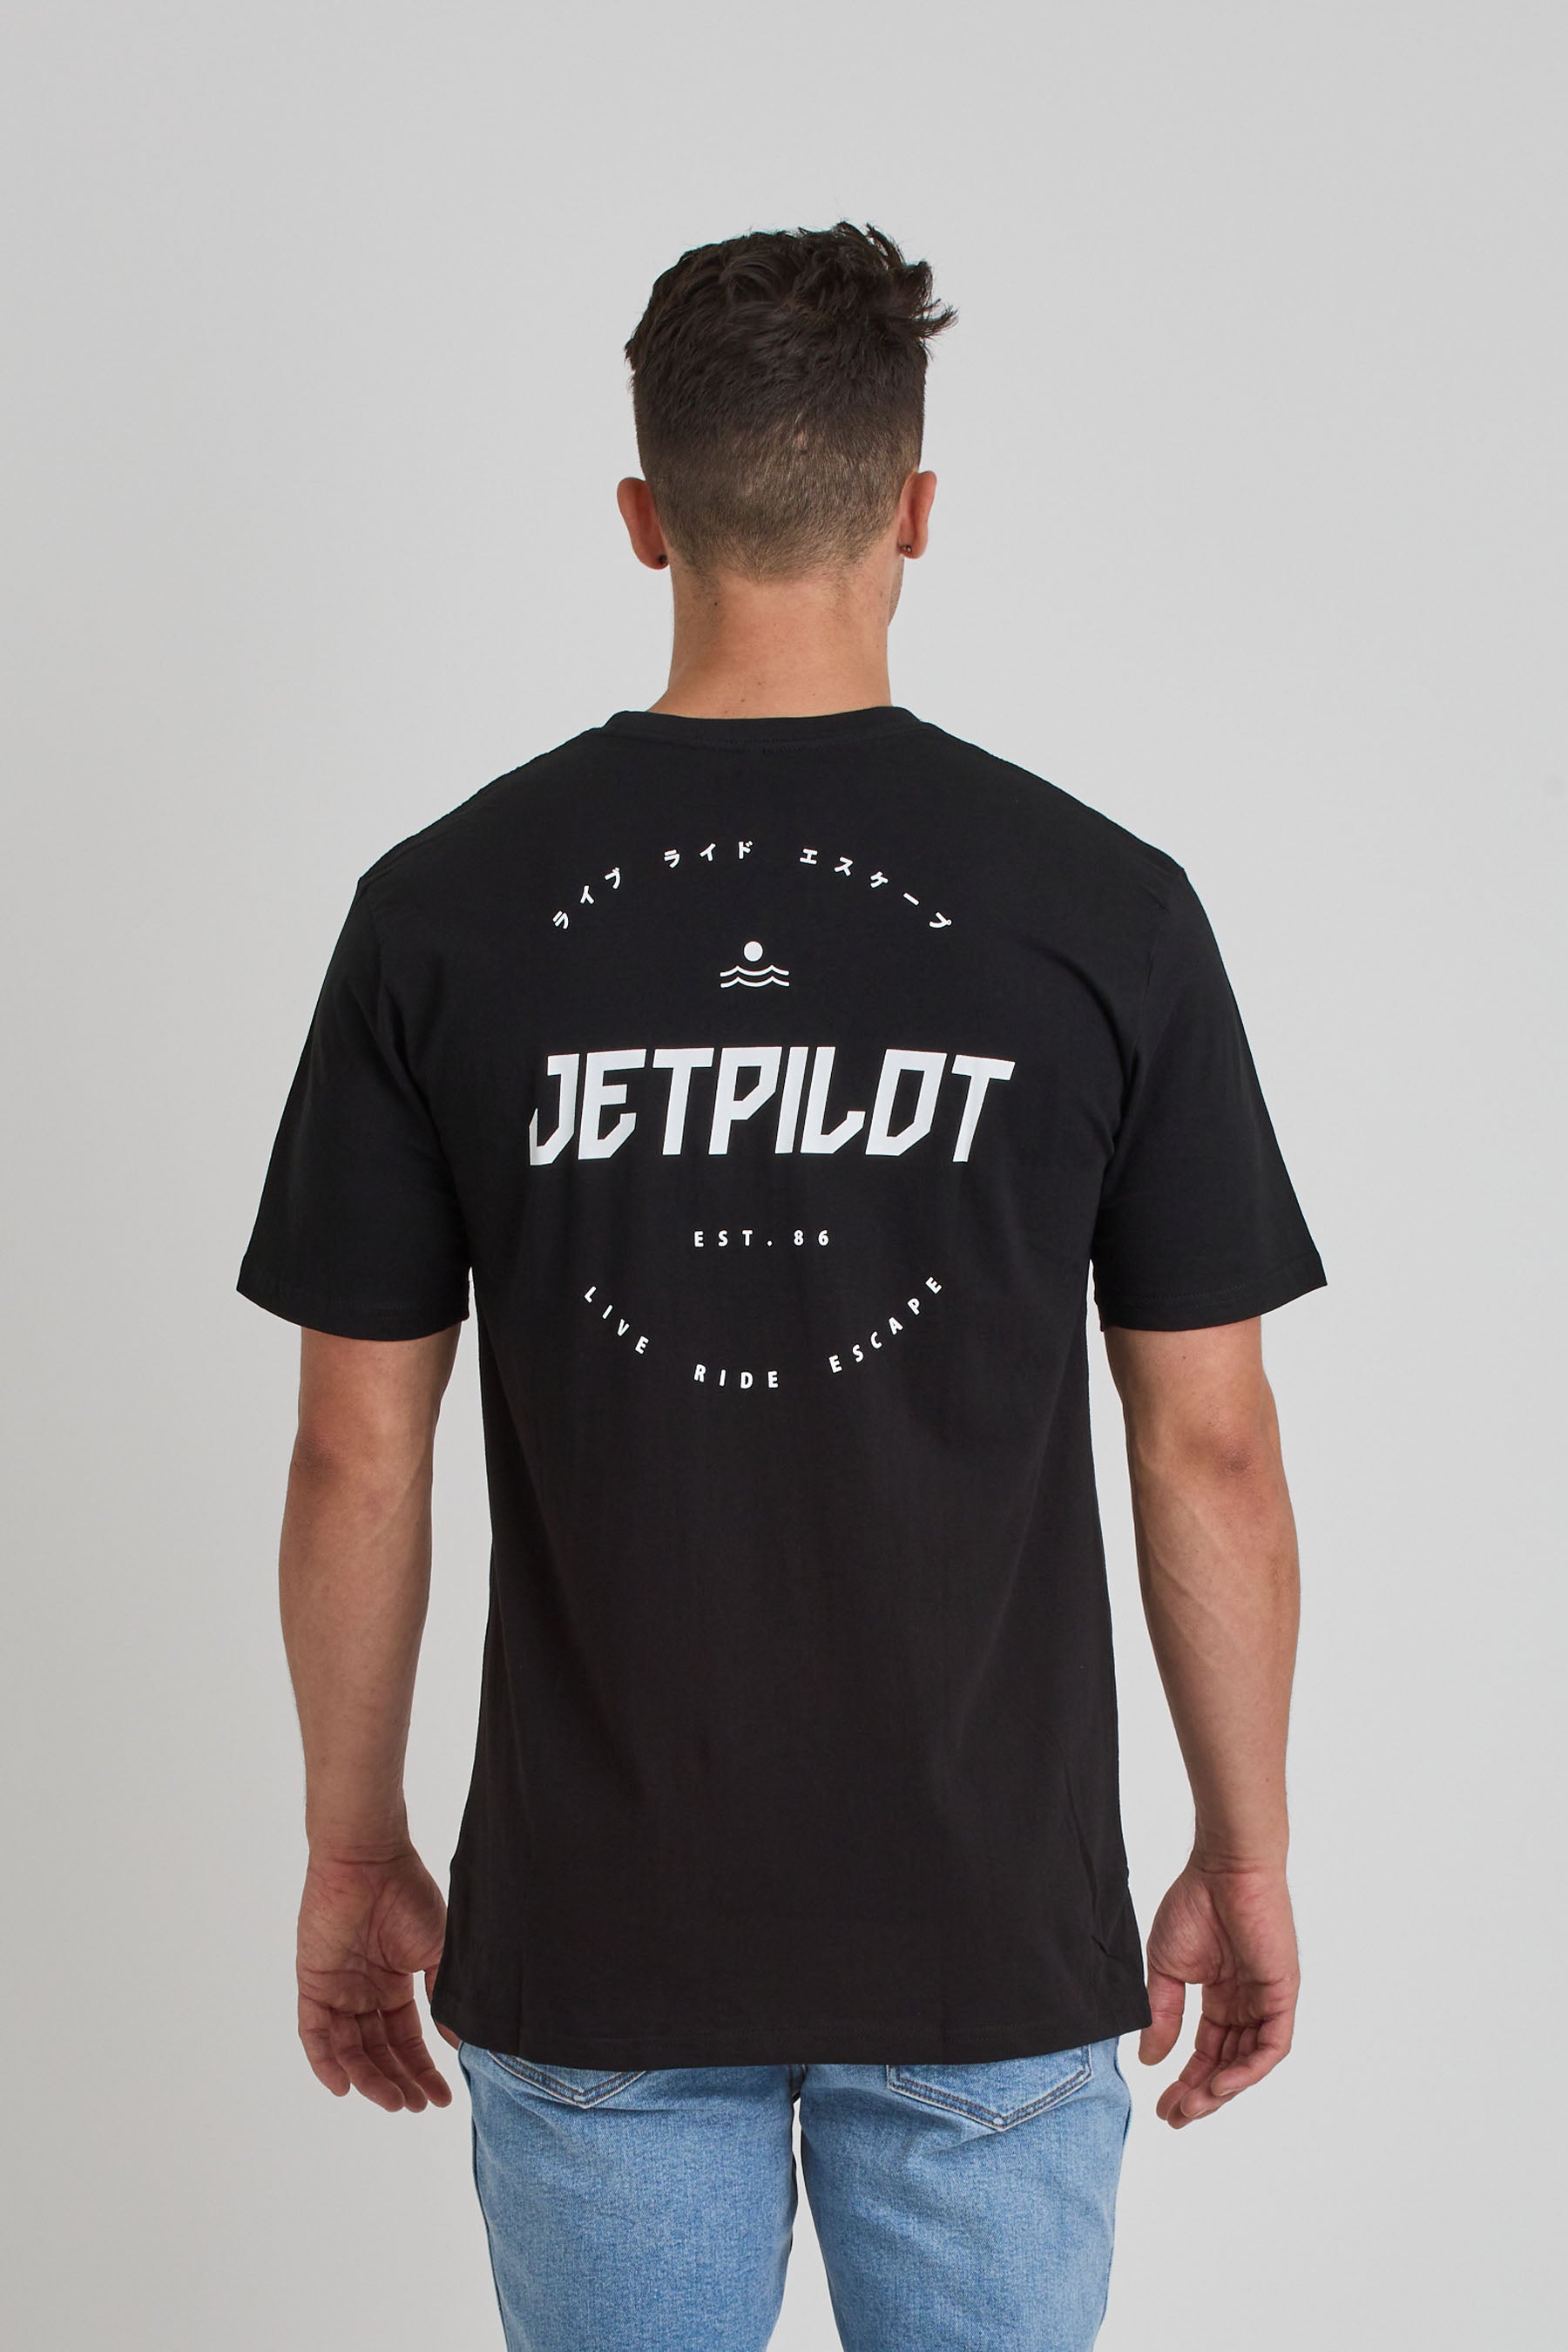 Jetpilot Est Mens Tee - Black